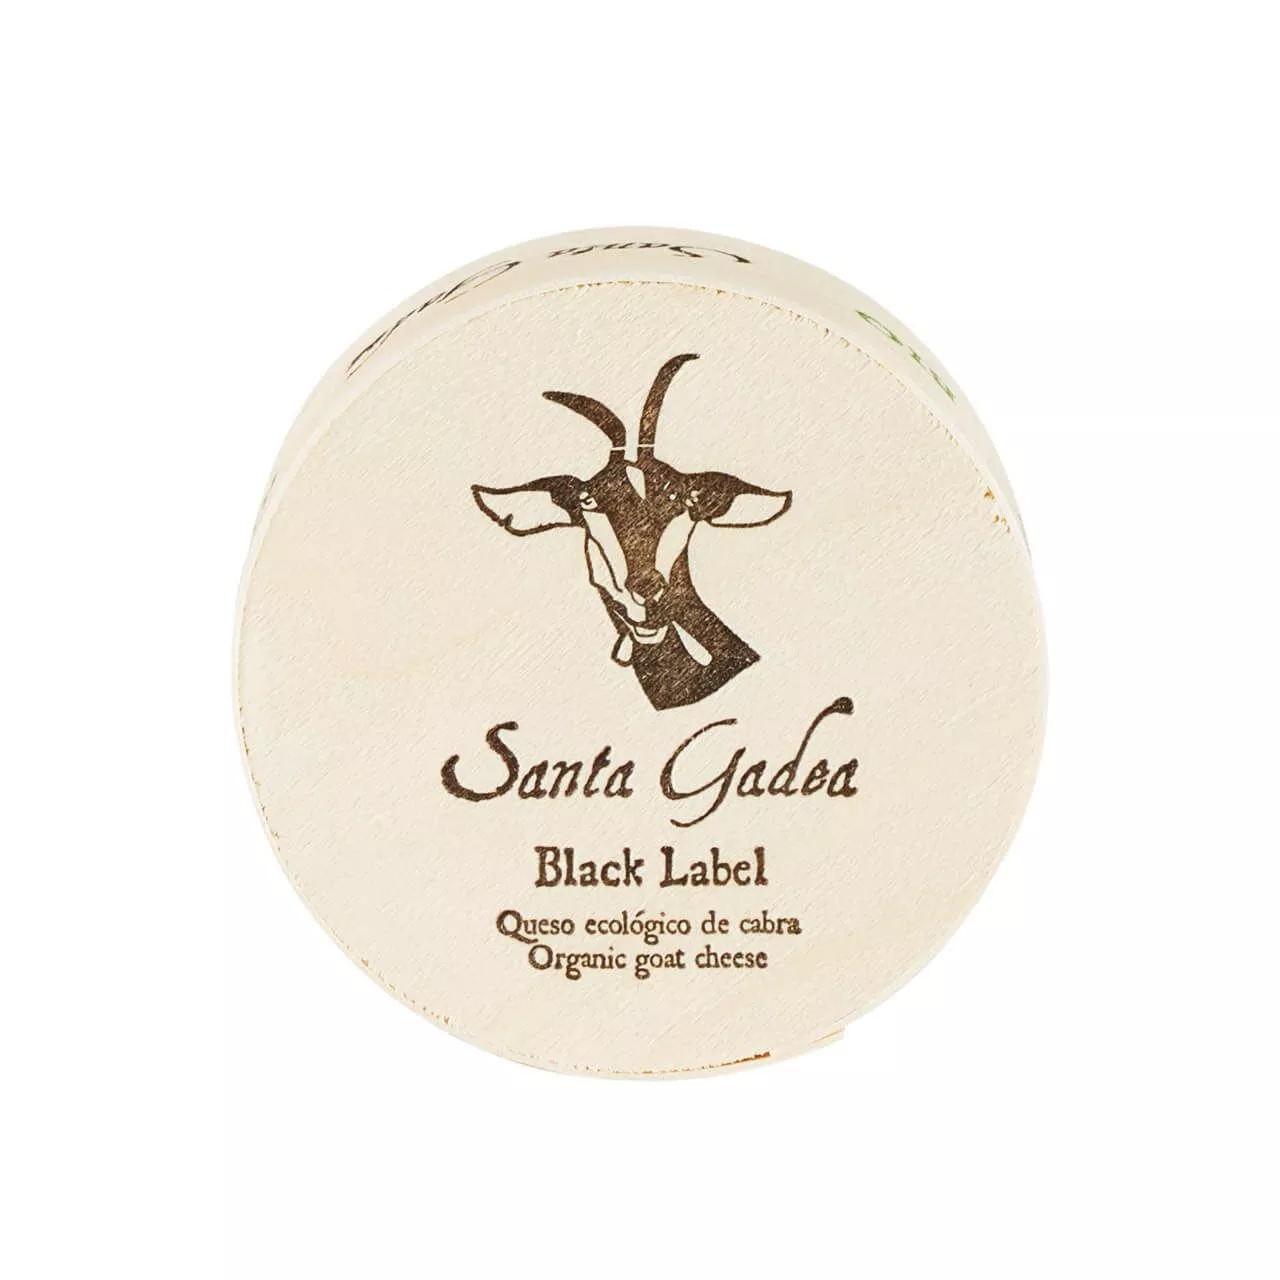 Santa Gadea organic goats' cheese, Black Label 135g